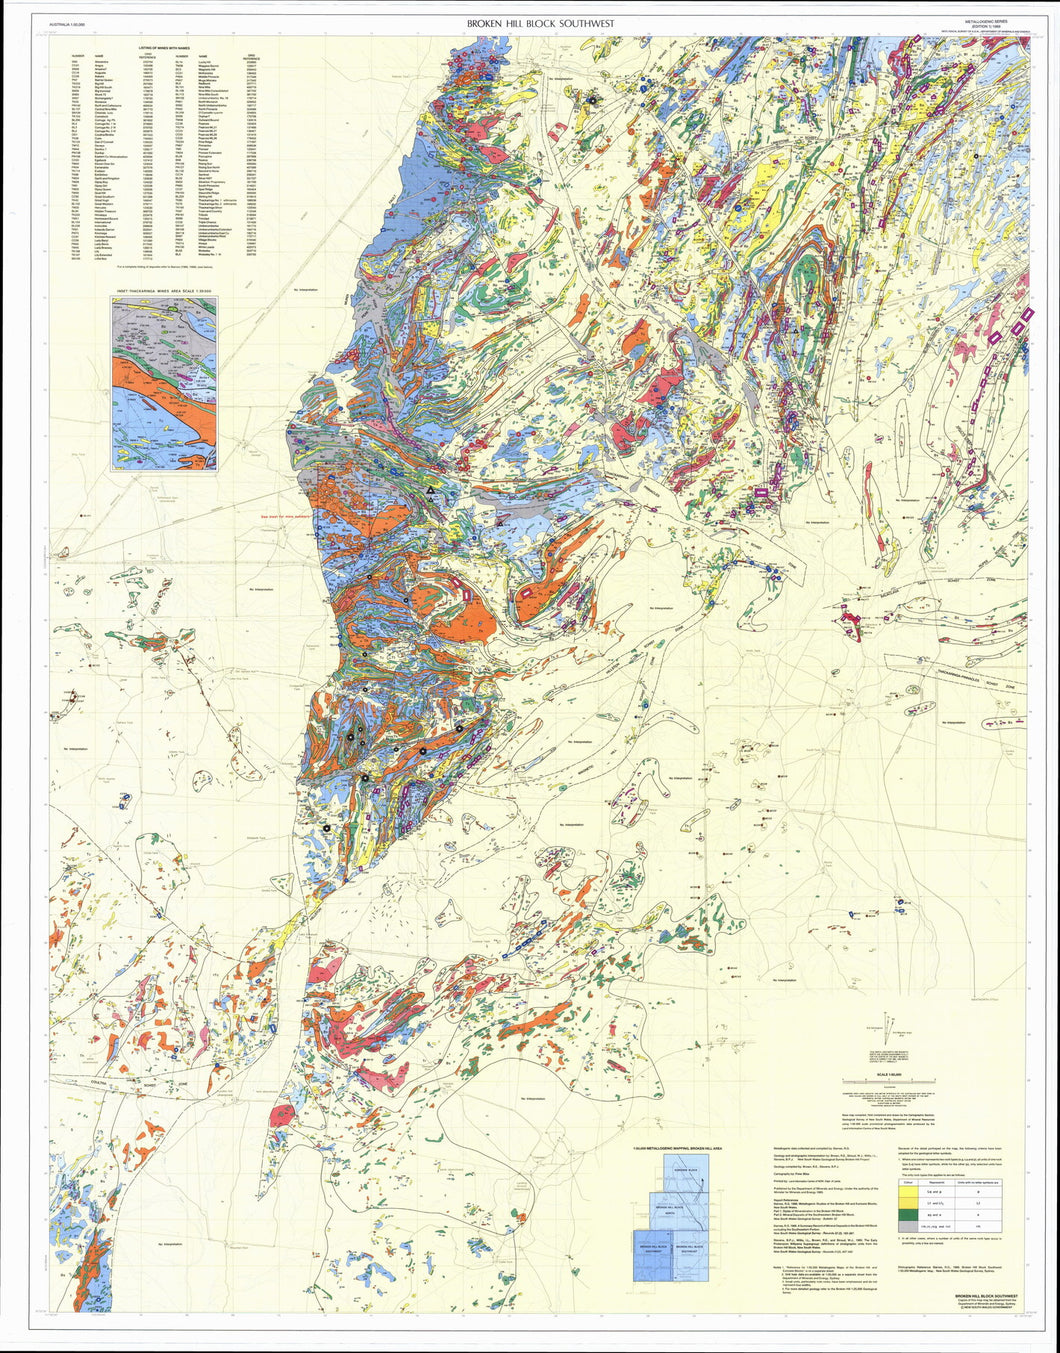 Image of Broken Hill Block Southwest 1:50000 Metallogenic map